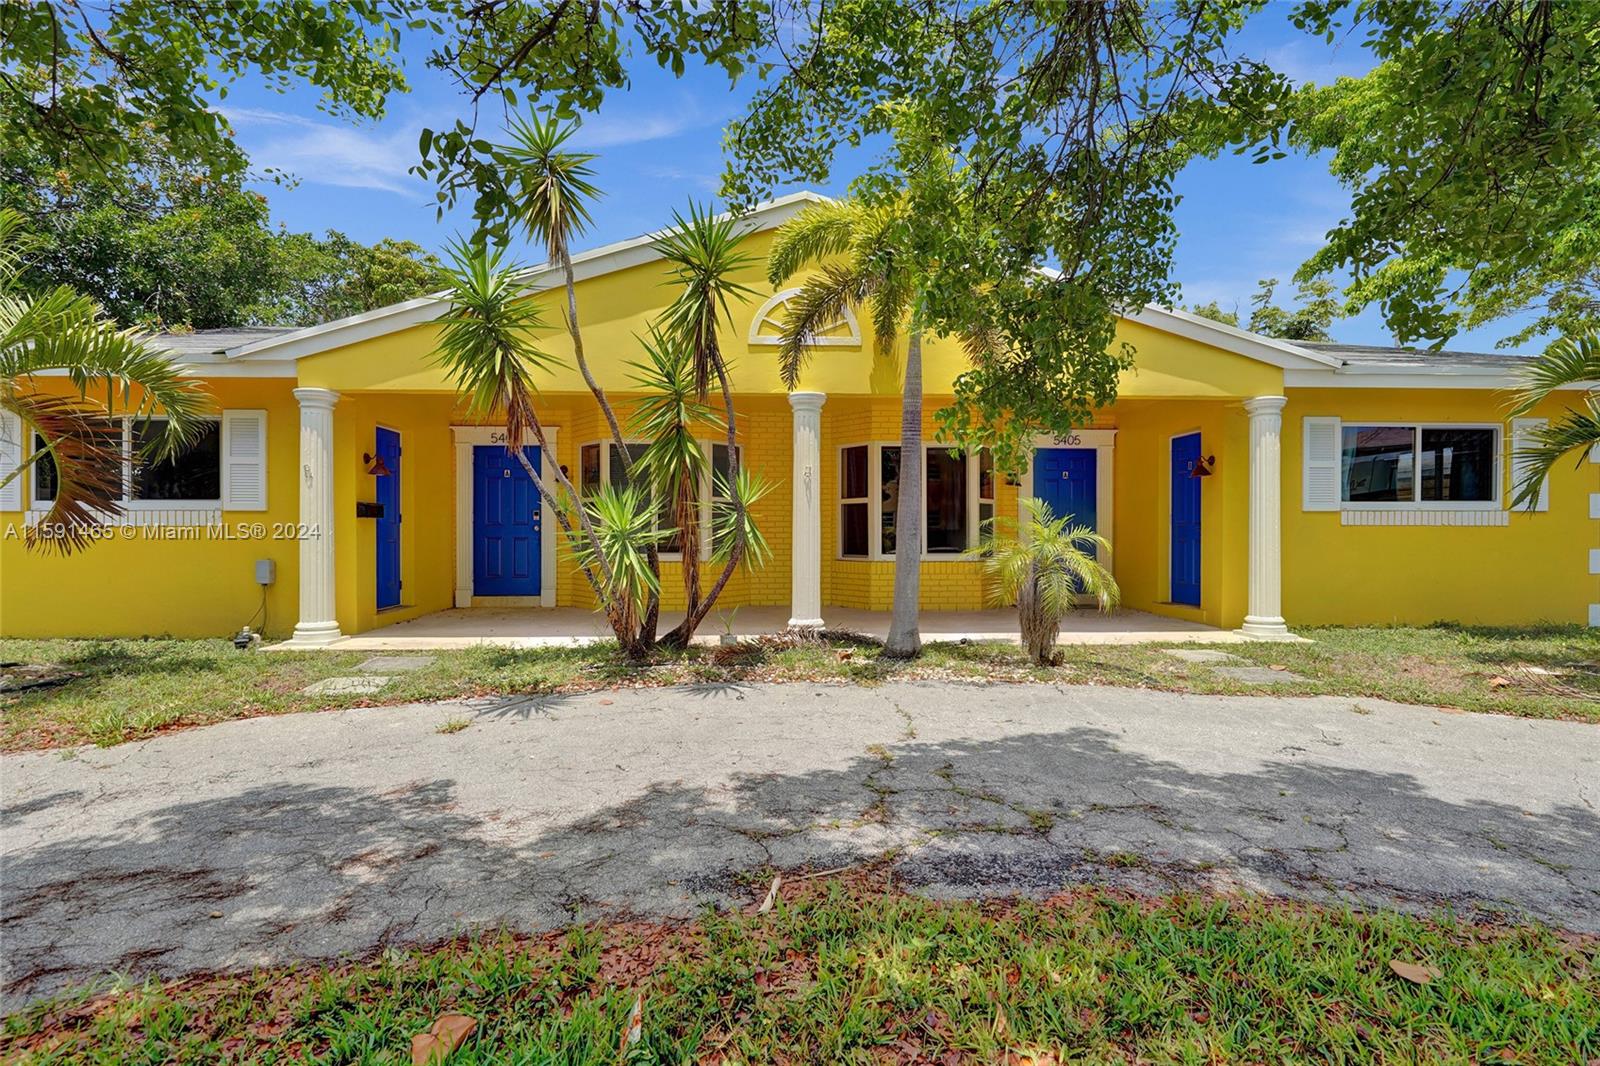 Rental Property at 5403 Ne 22nd Ter, Fort Lauderdale, Broward County, Florida -  - $1,150,000 MO.